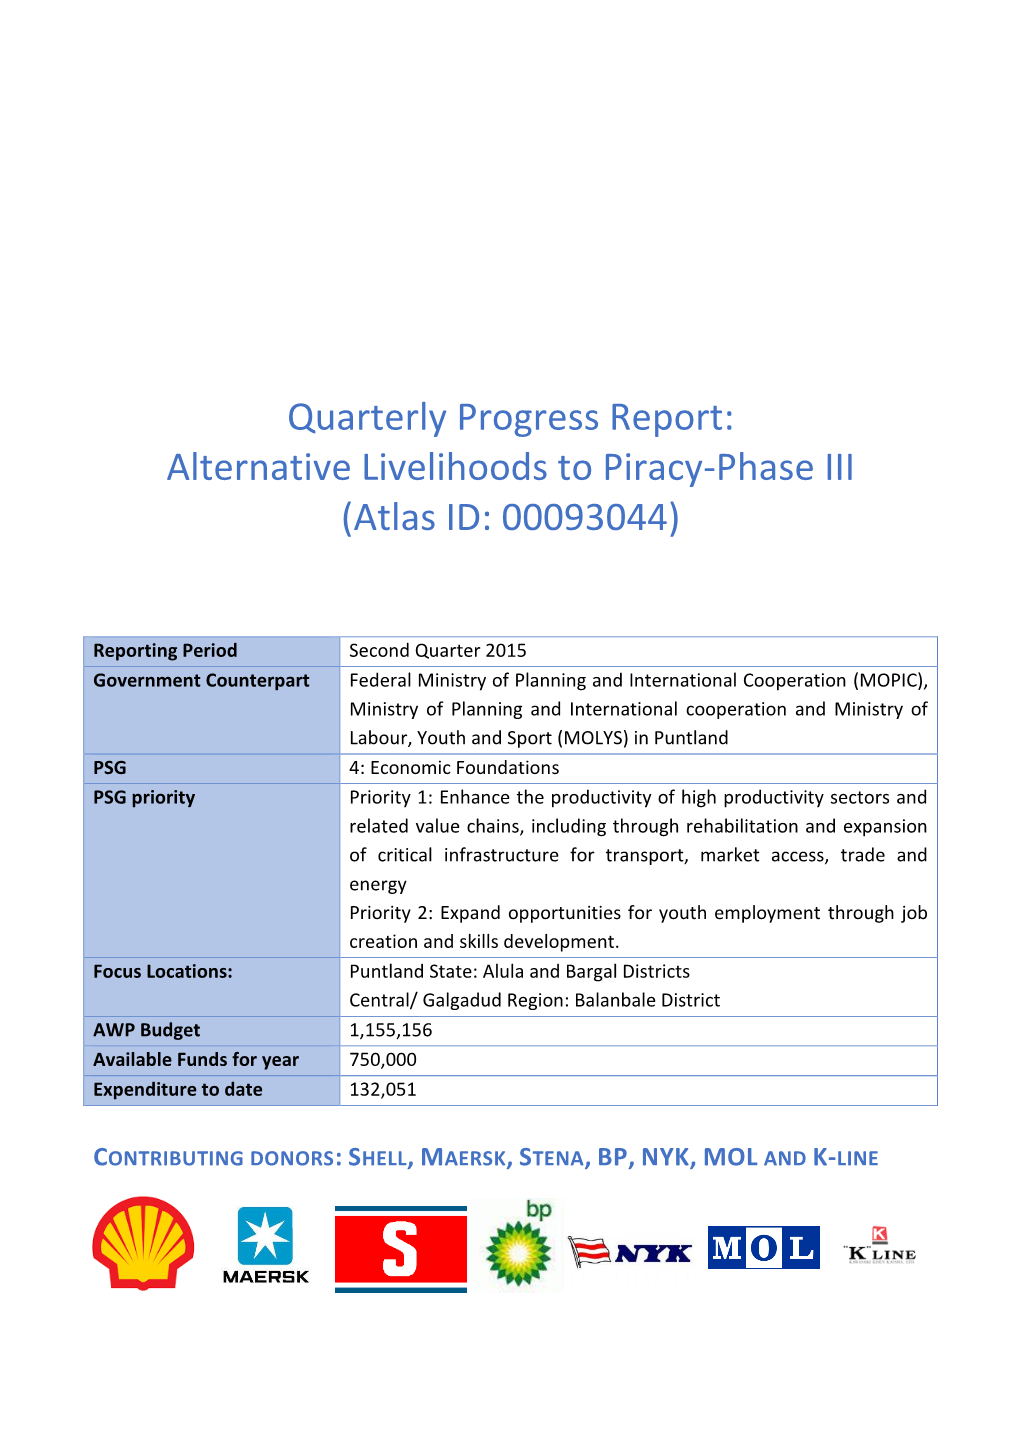 Quarterly Progress Report: Alternative Livelihoods to Piracy-Phase III (Atlas ID: 00093044)